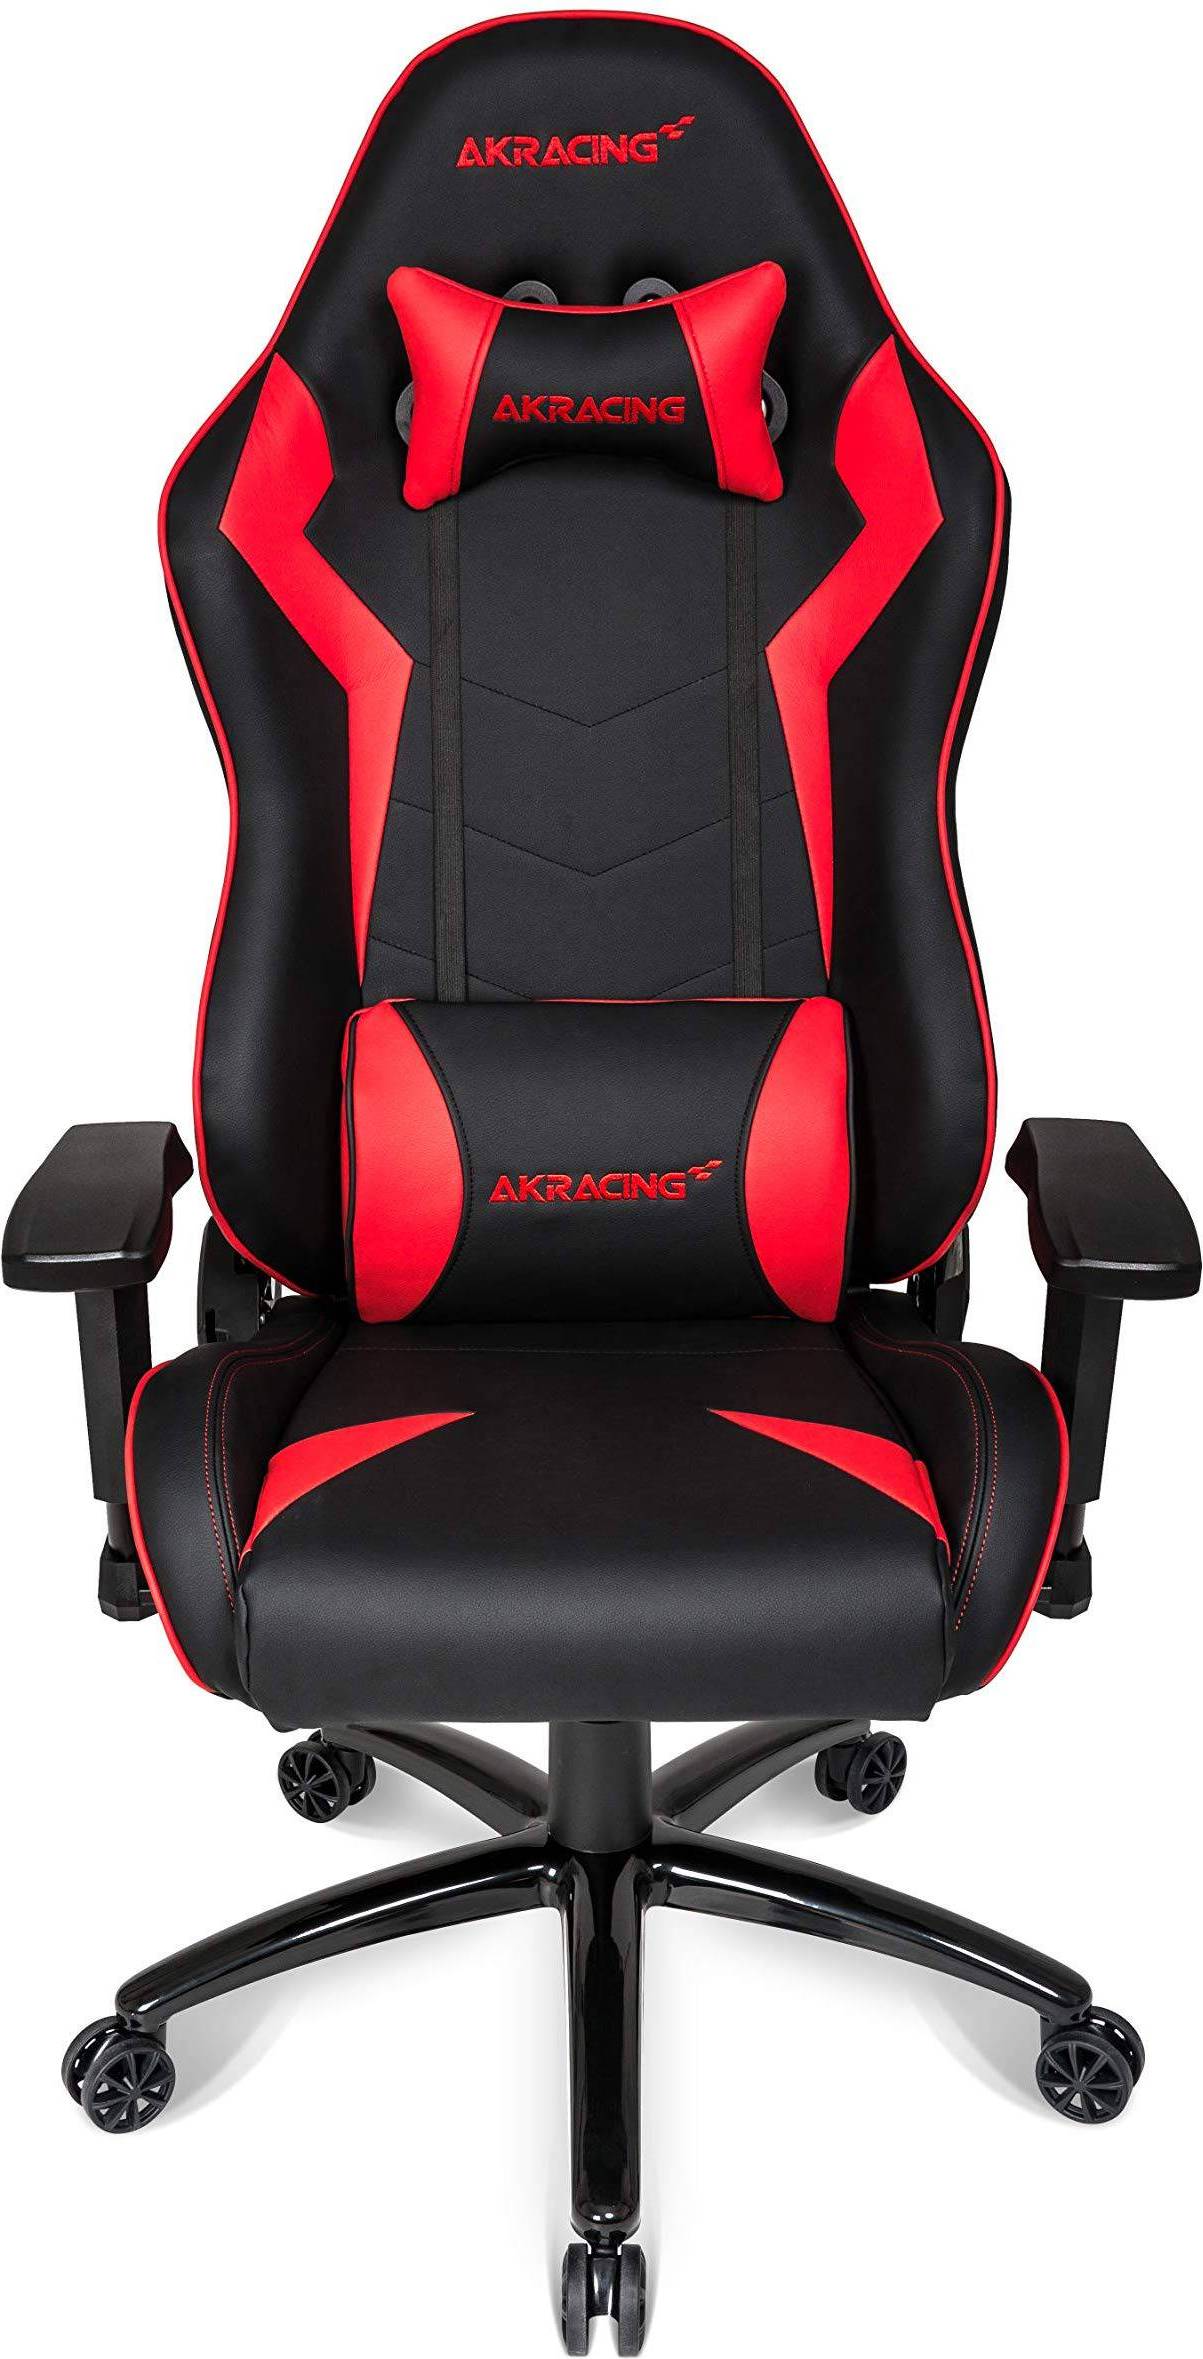  Bild på AKracing SX Gaming Chair - Black/Red gamingstol